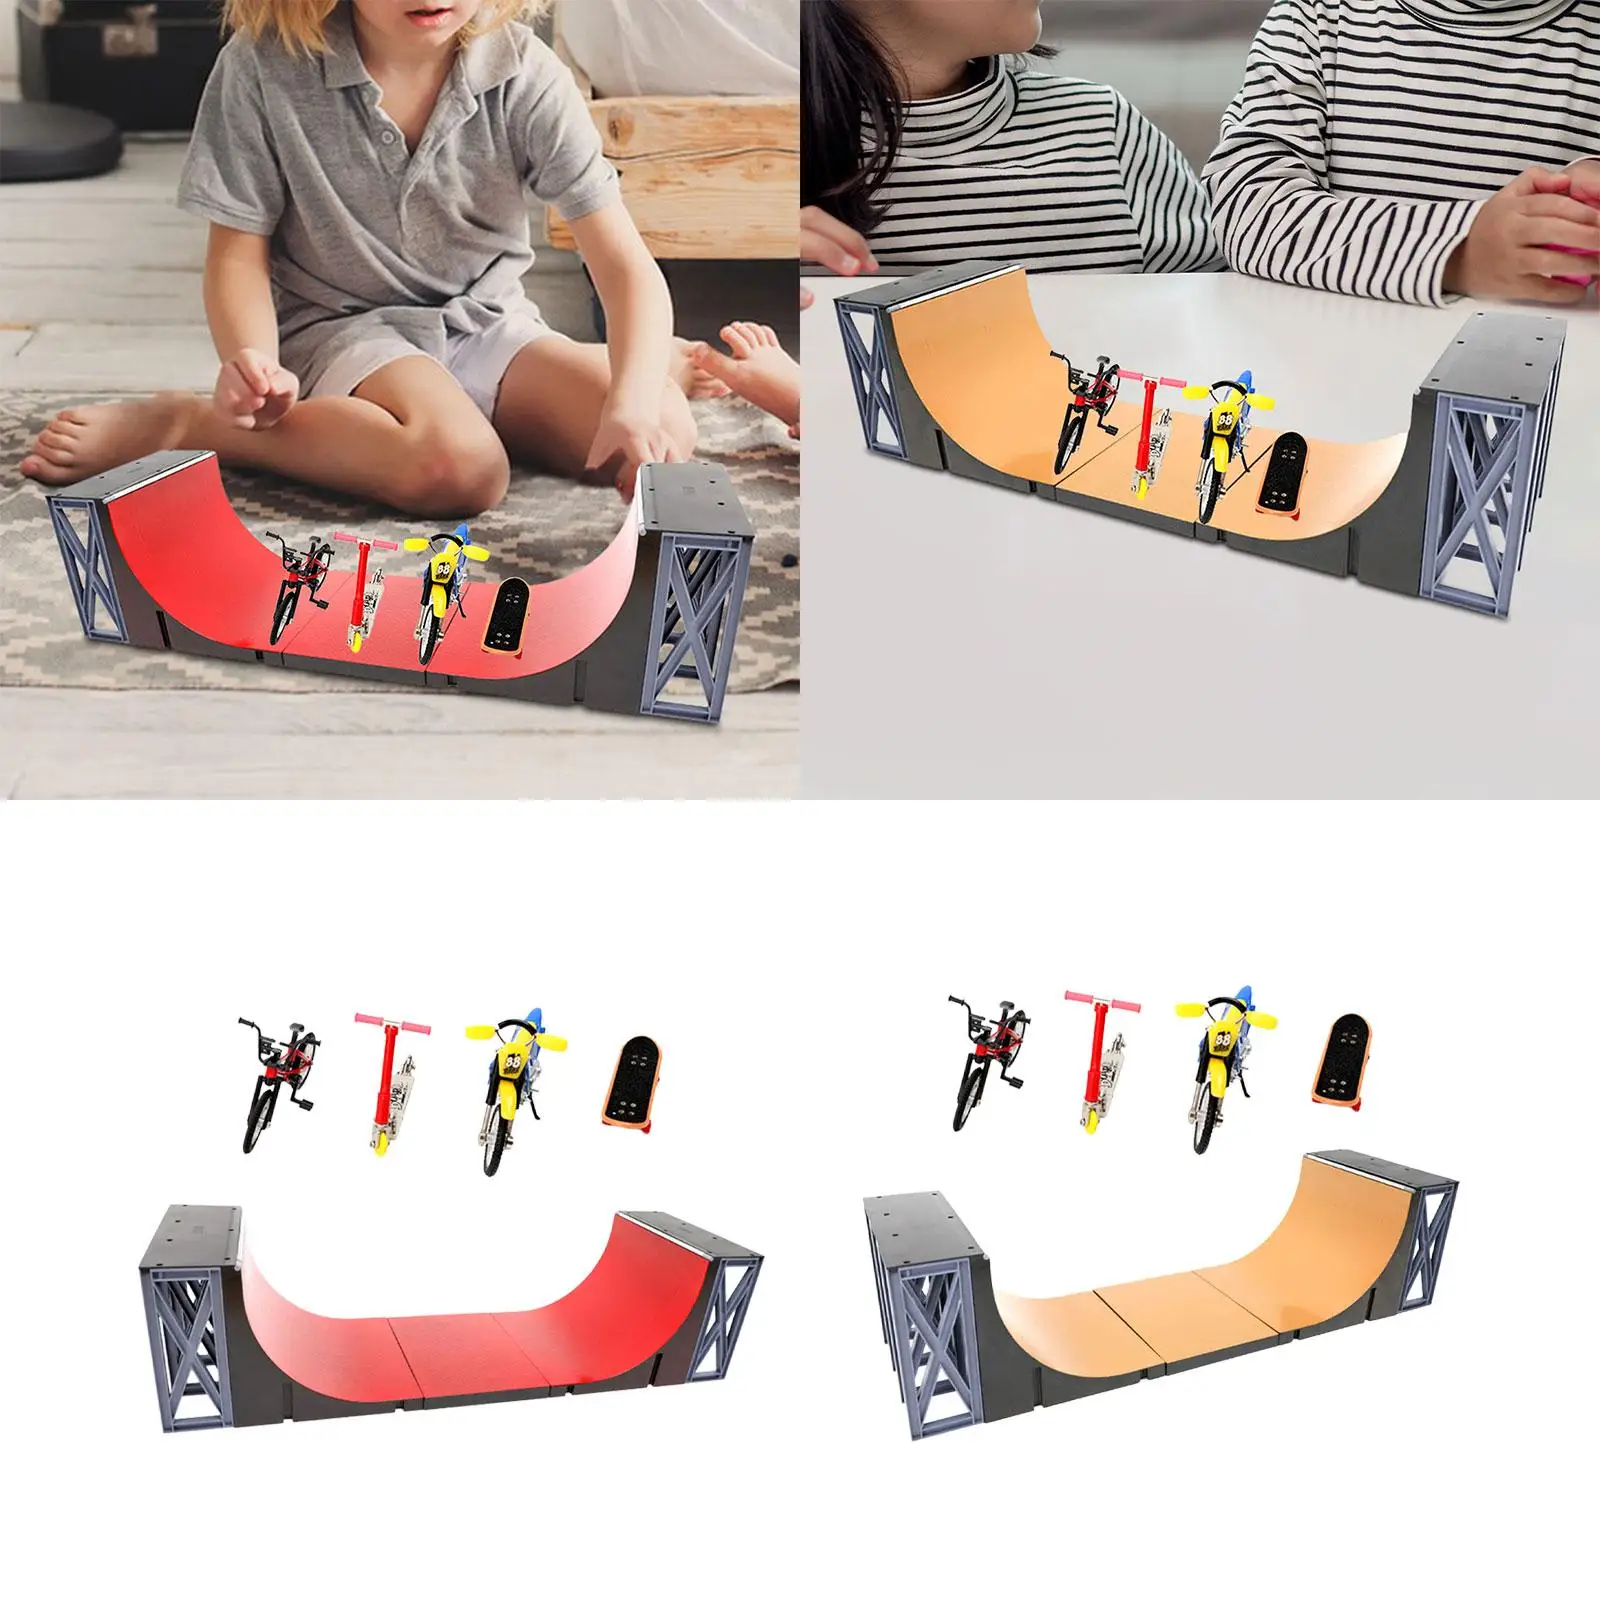 5x Fingerboard Ramp Finger Set Fingerboard Skate Ramps for Girls Kids Adults